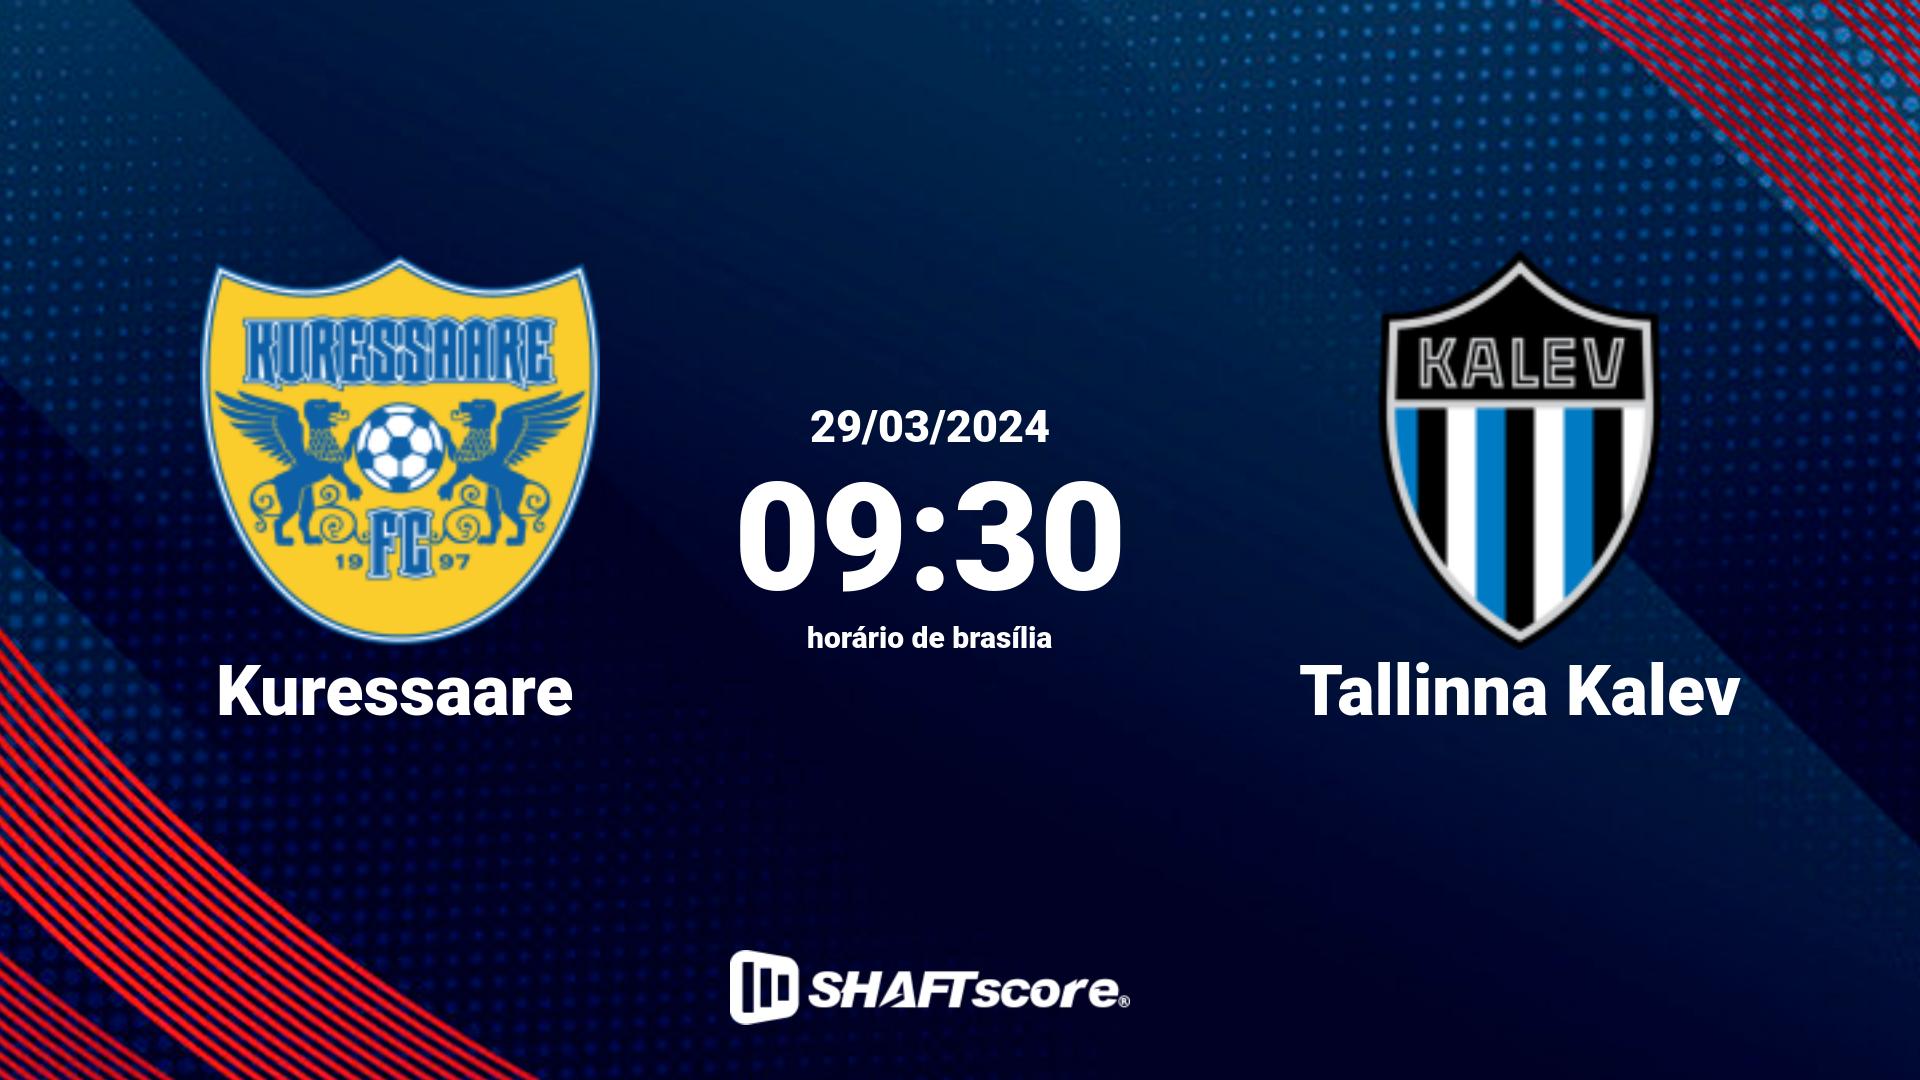 Estatísticas do jogo Kuressaare vs Tallinna Kalev 29.03 09:30